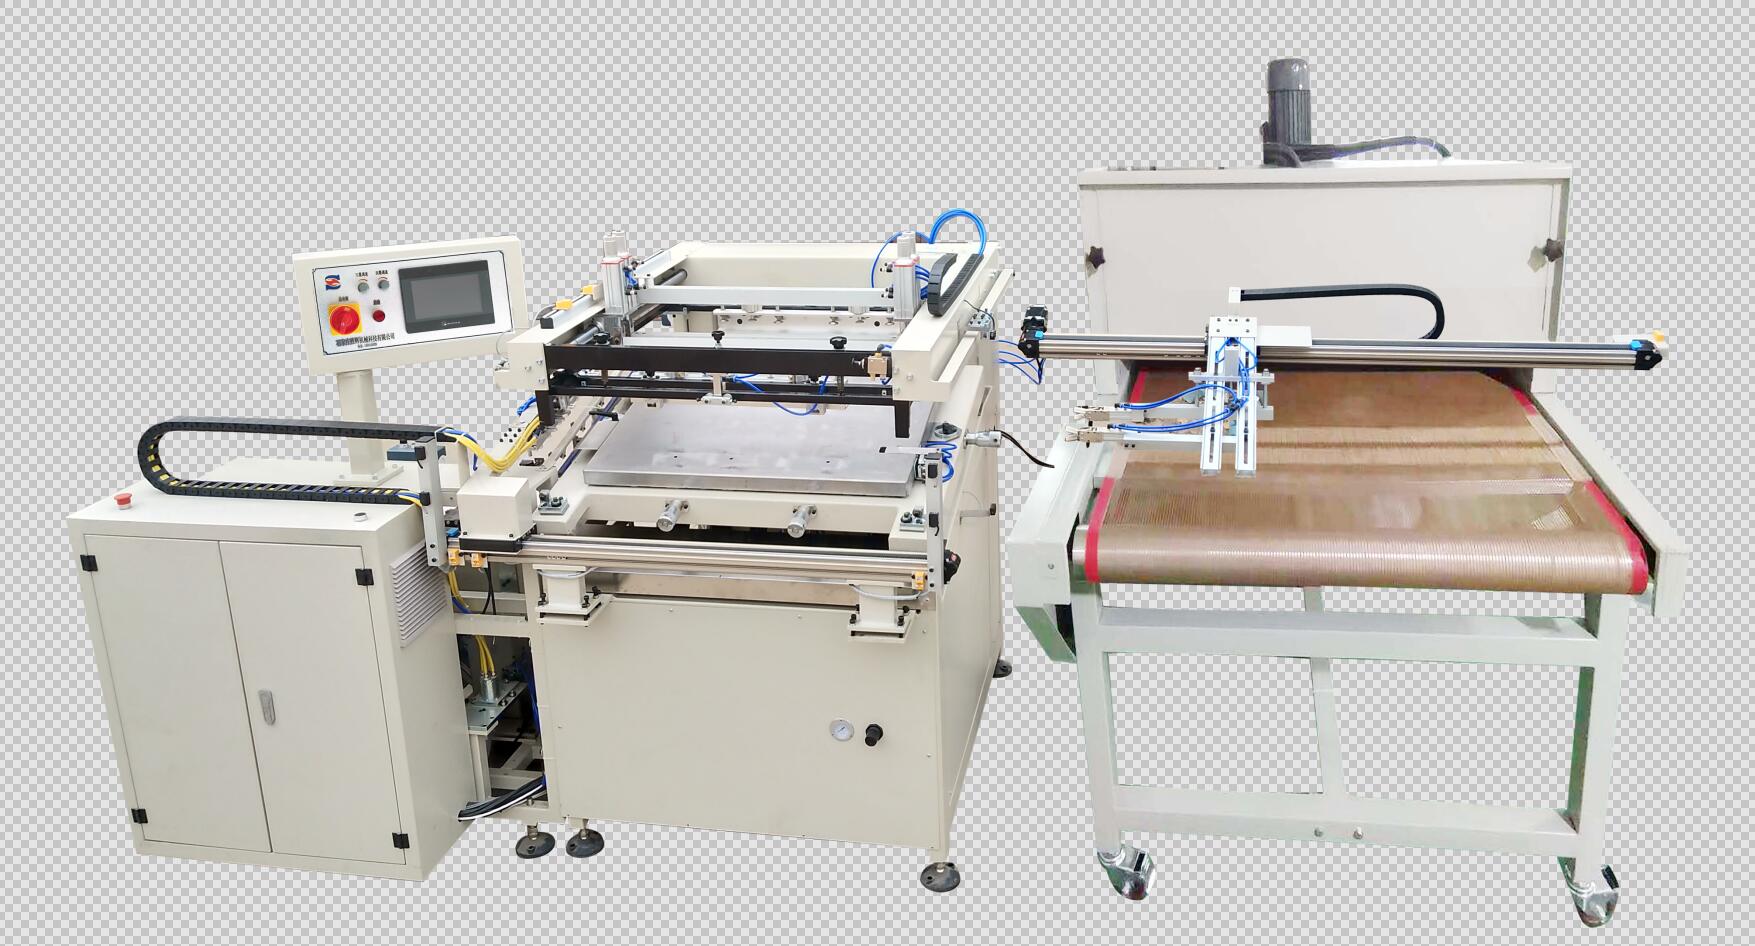 HY-Z57 Automatic Screen Printing Machine